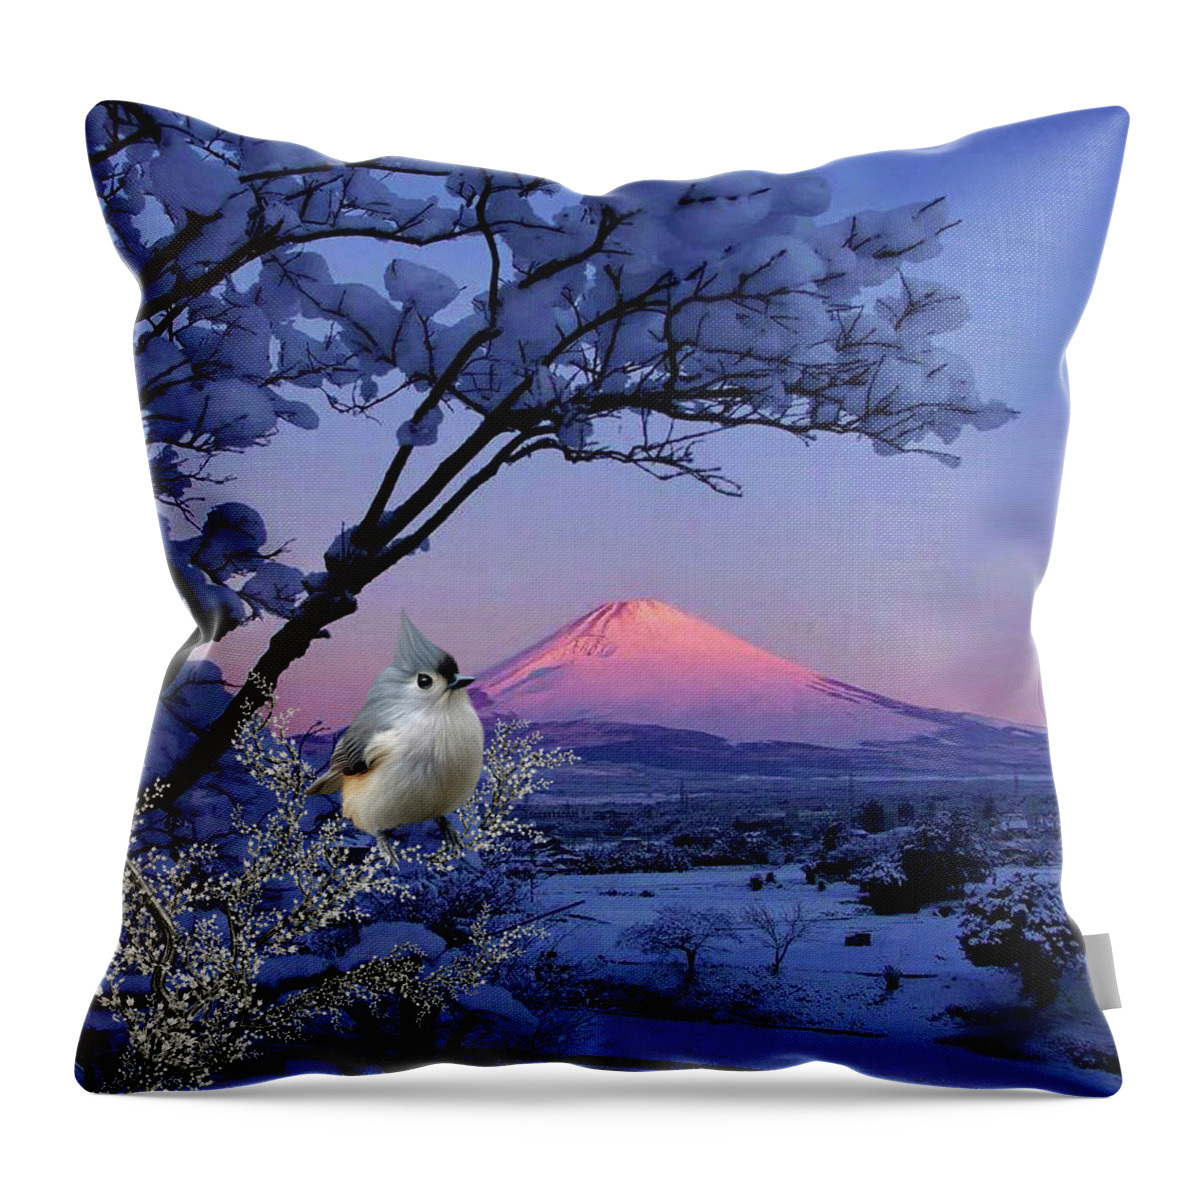 A Bird In Winter Scene Throw Pillow featuring the digital art Tufted Titmouse in winter scene by John Junek